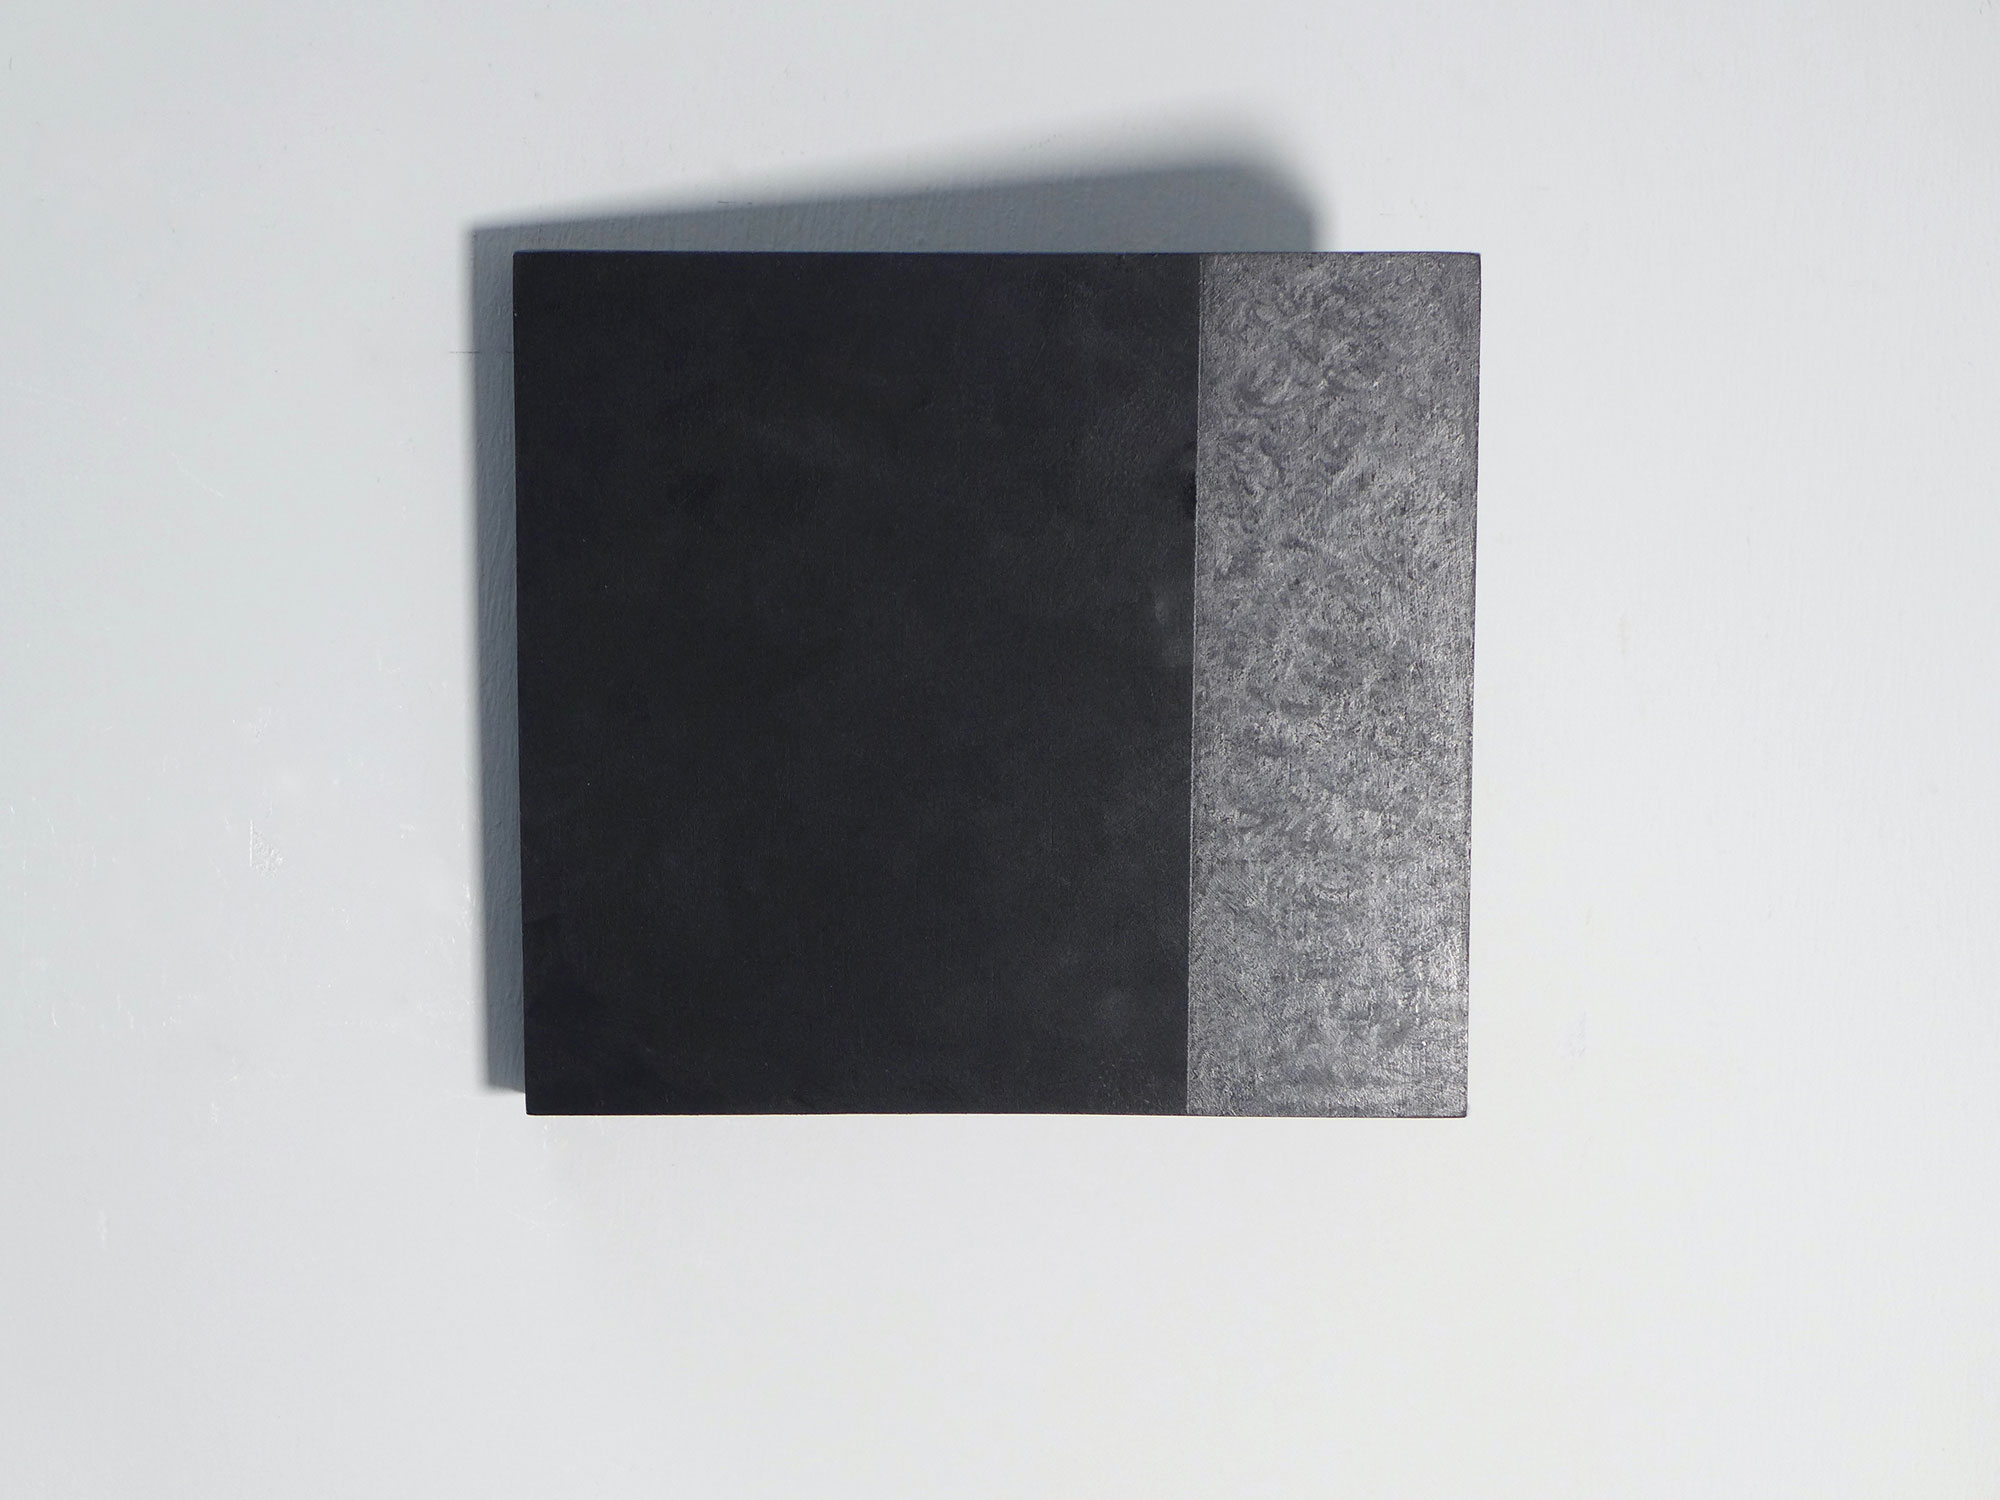 Kenneth Dingwall, A Presence, 2012, wax, casein and graphite on wood, 17cm x 19cm x 10cm